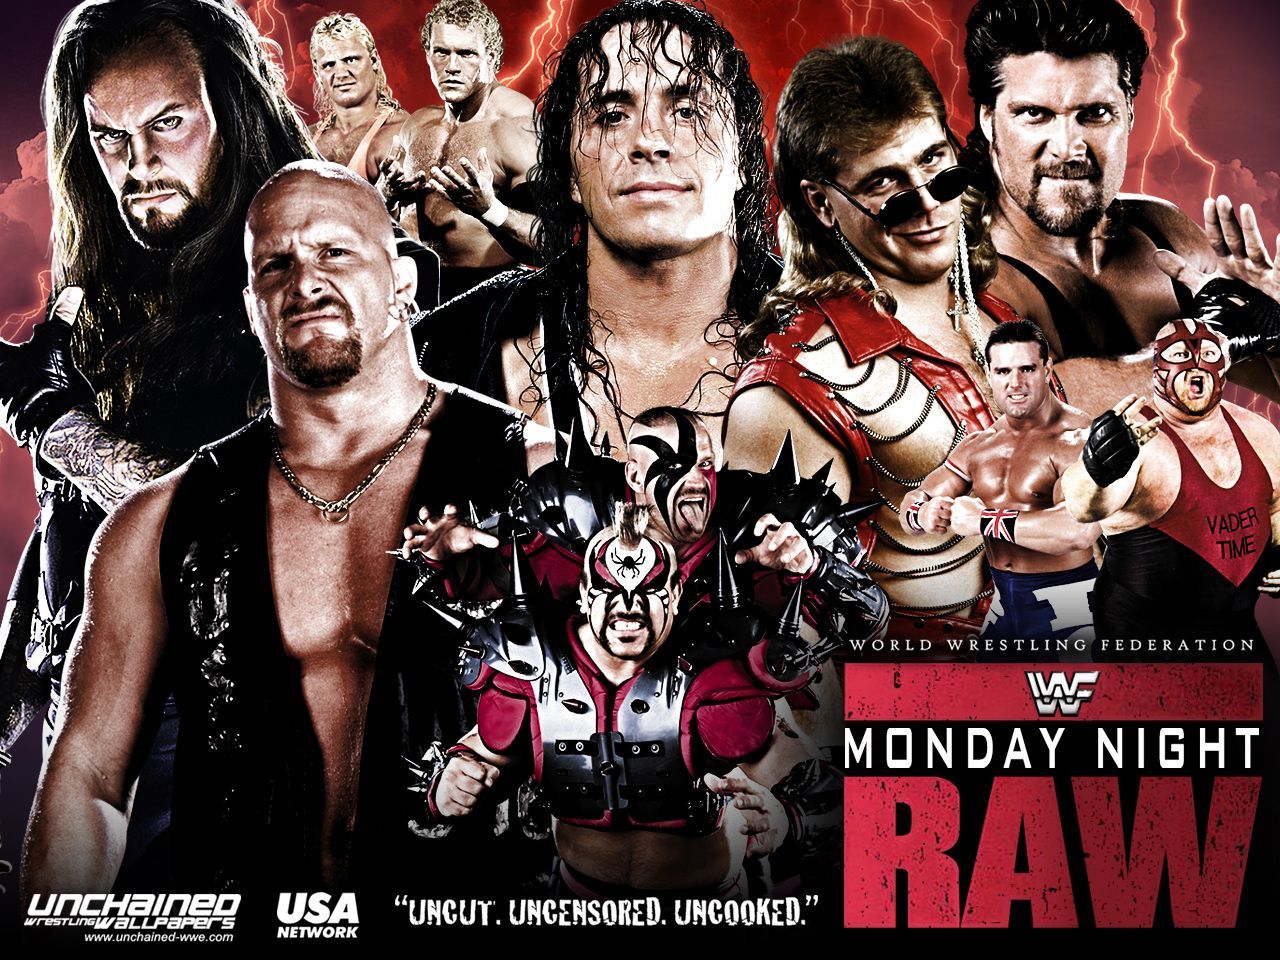 WWE Wallpaper: Classic Raw. Wwe, Wwe wallpaper, Wrestling superstars